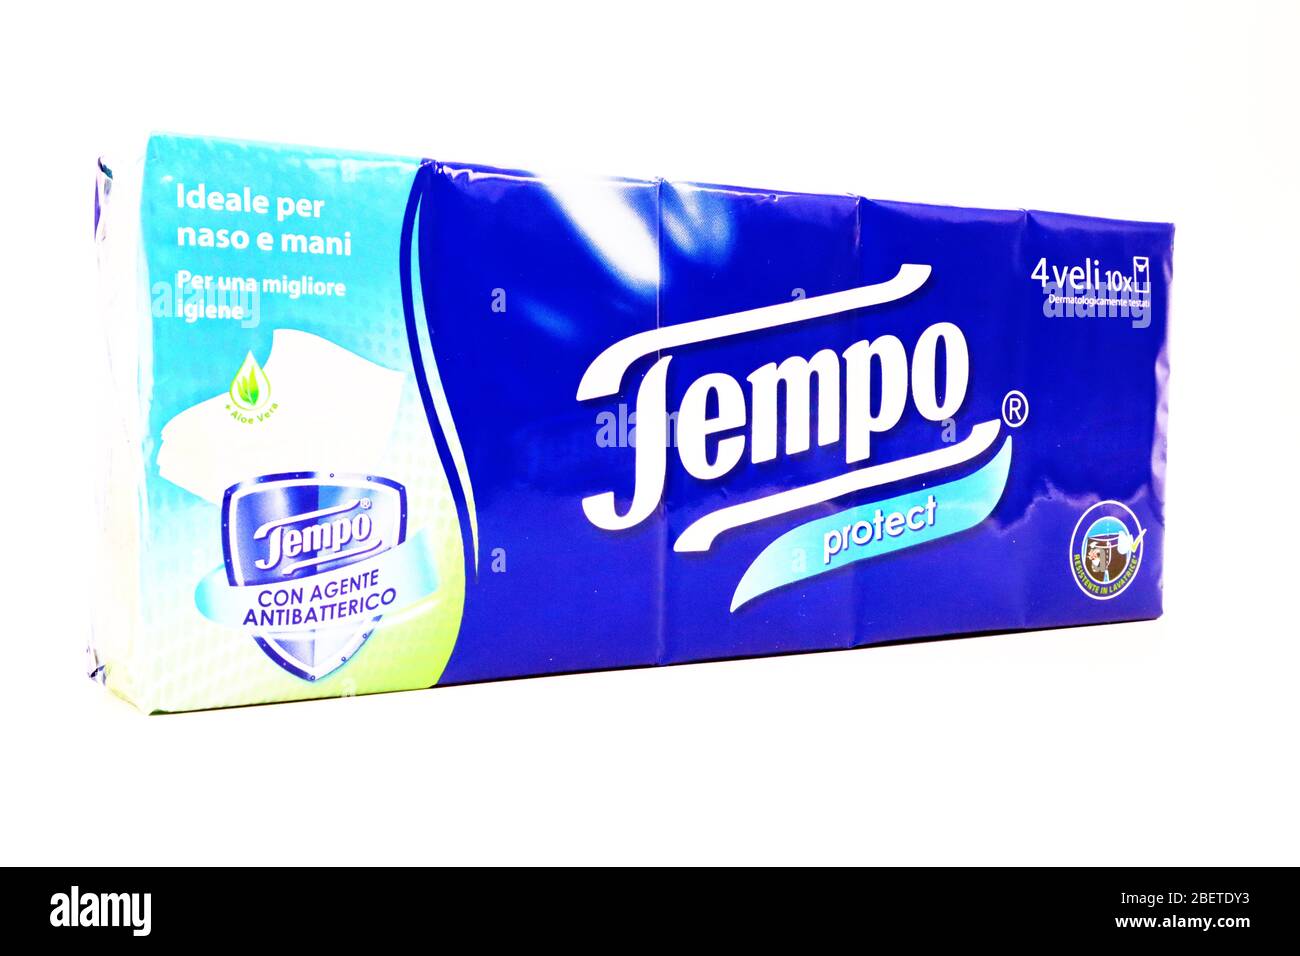 TEMPO Handkerchiefs, Pocket Tempo is a brand of ESSITY Stock - Alamy